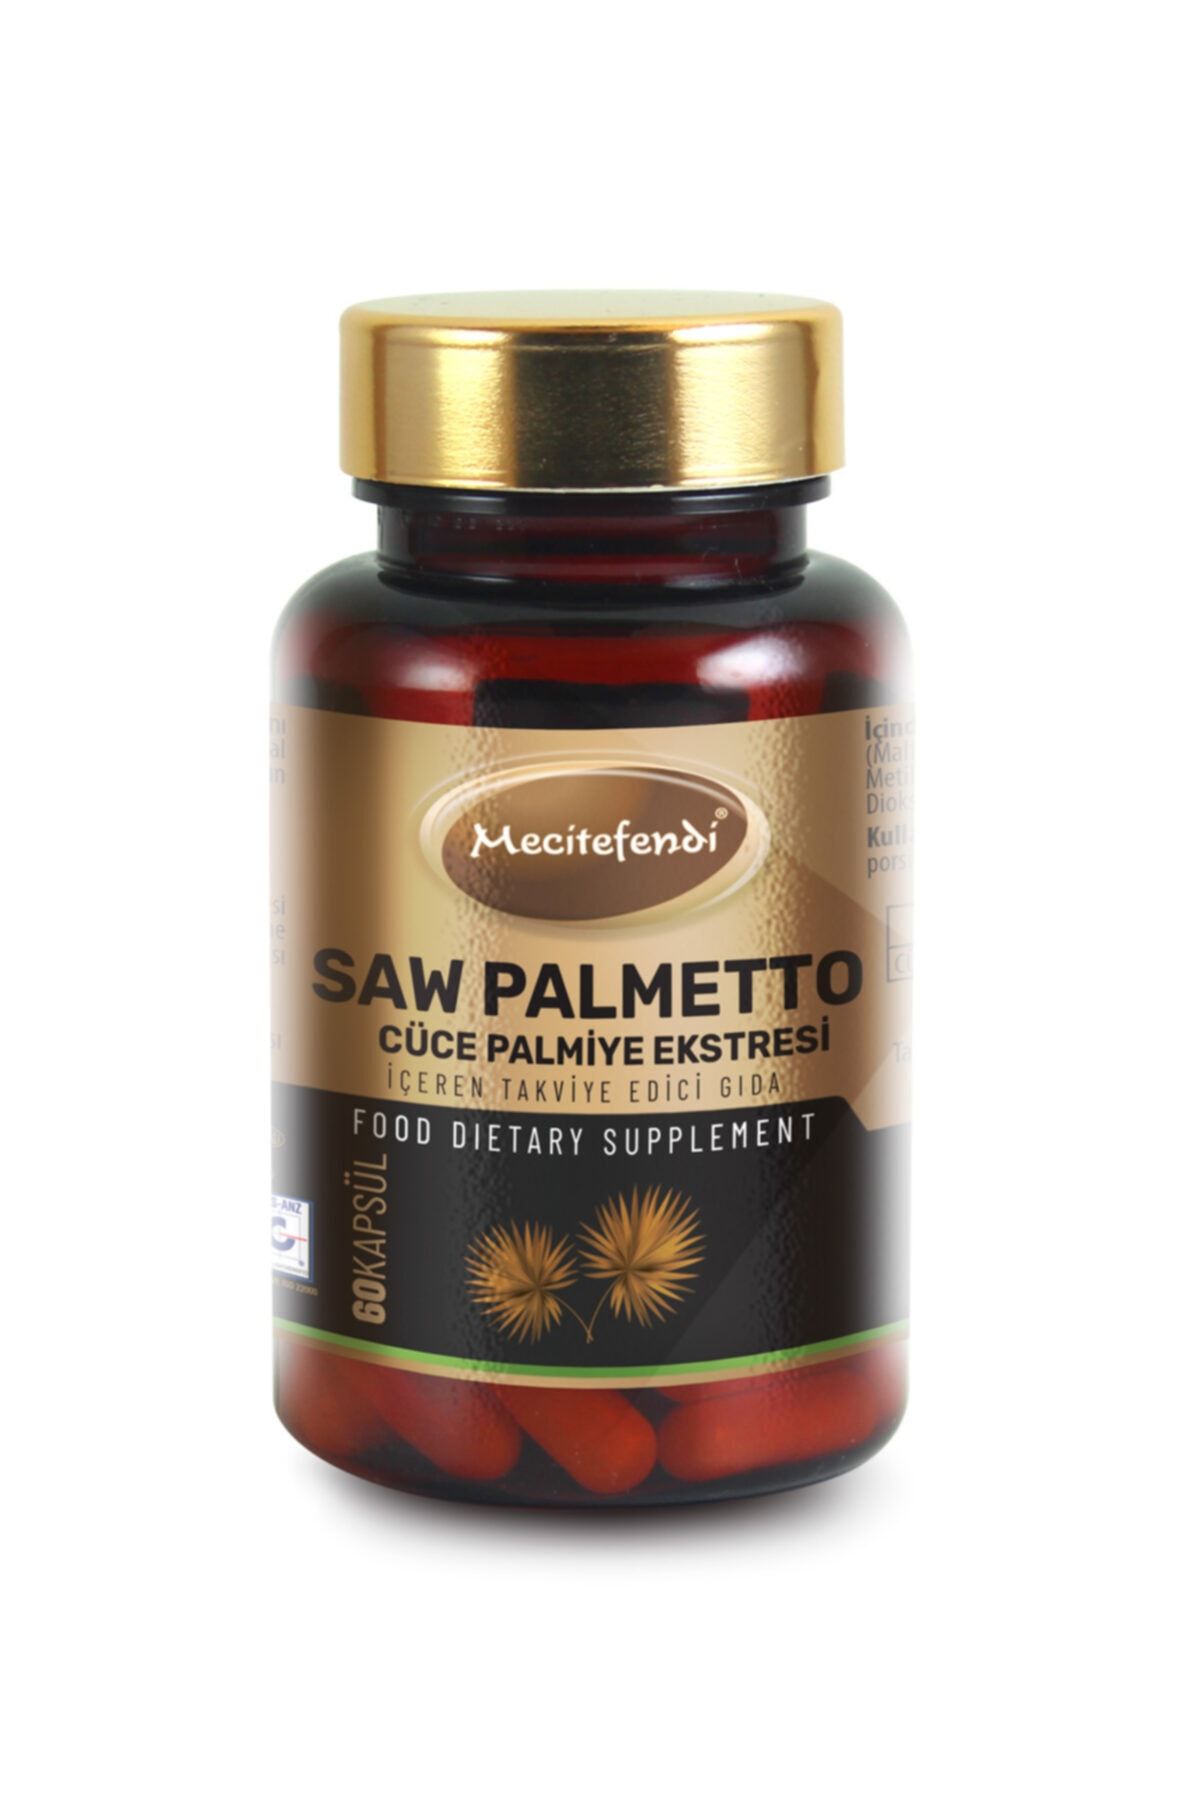 Mecit Efendi Saw Palmetto Cüce Palmiye  Ekstresi 60 Kapsül 580 mg